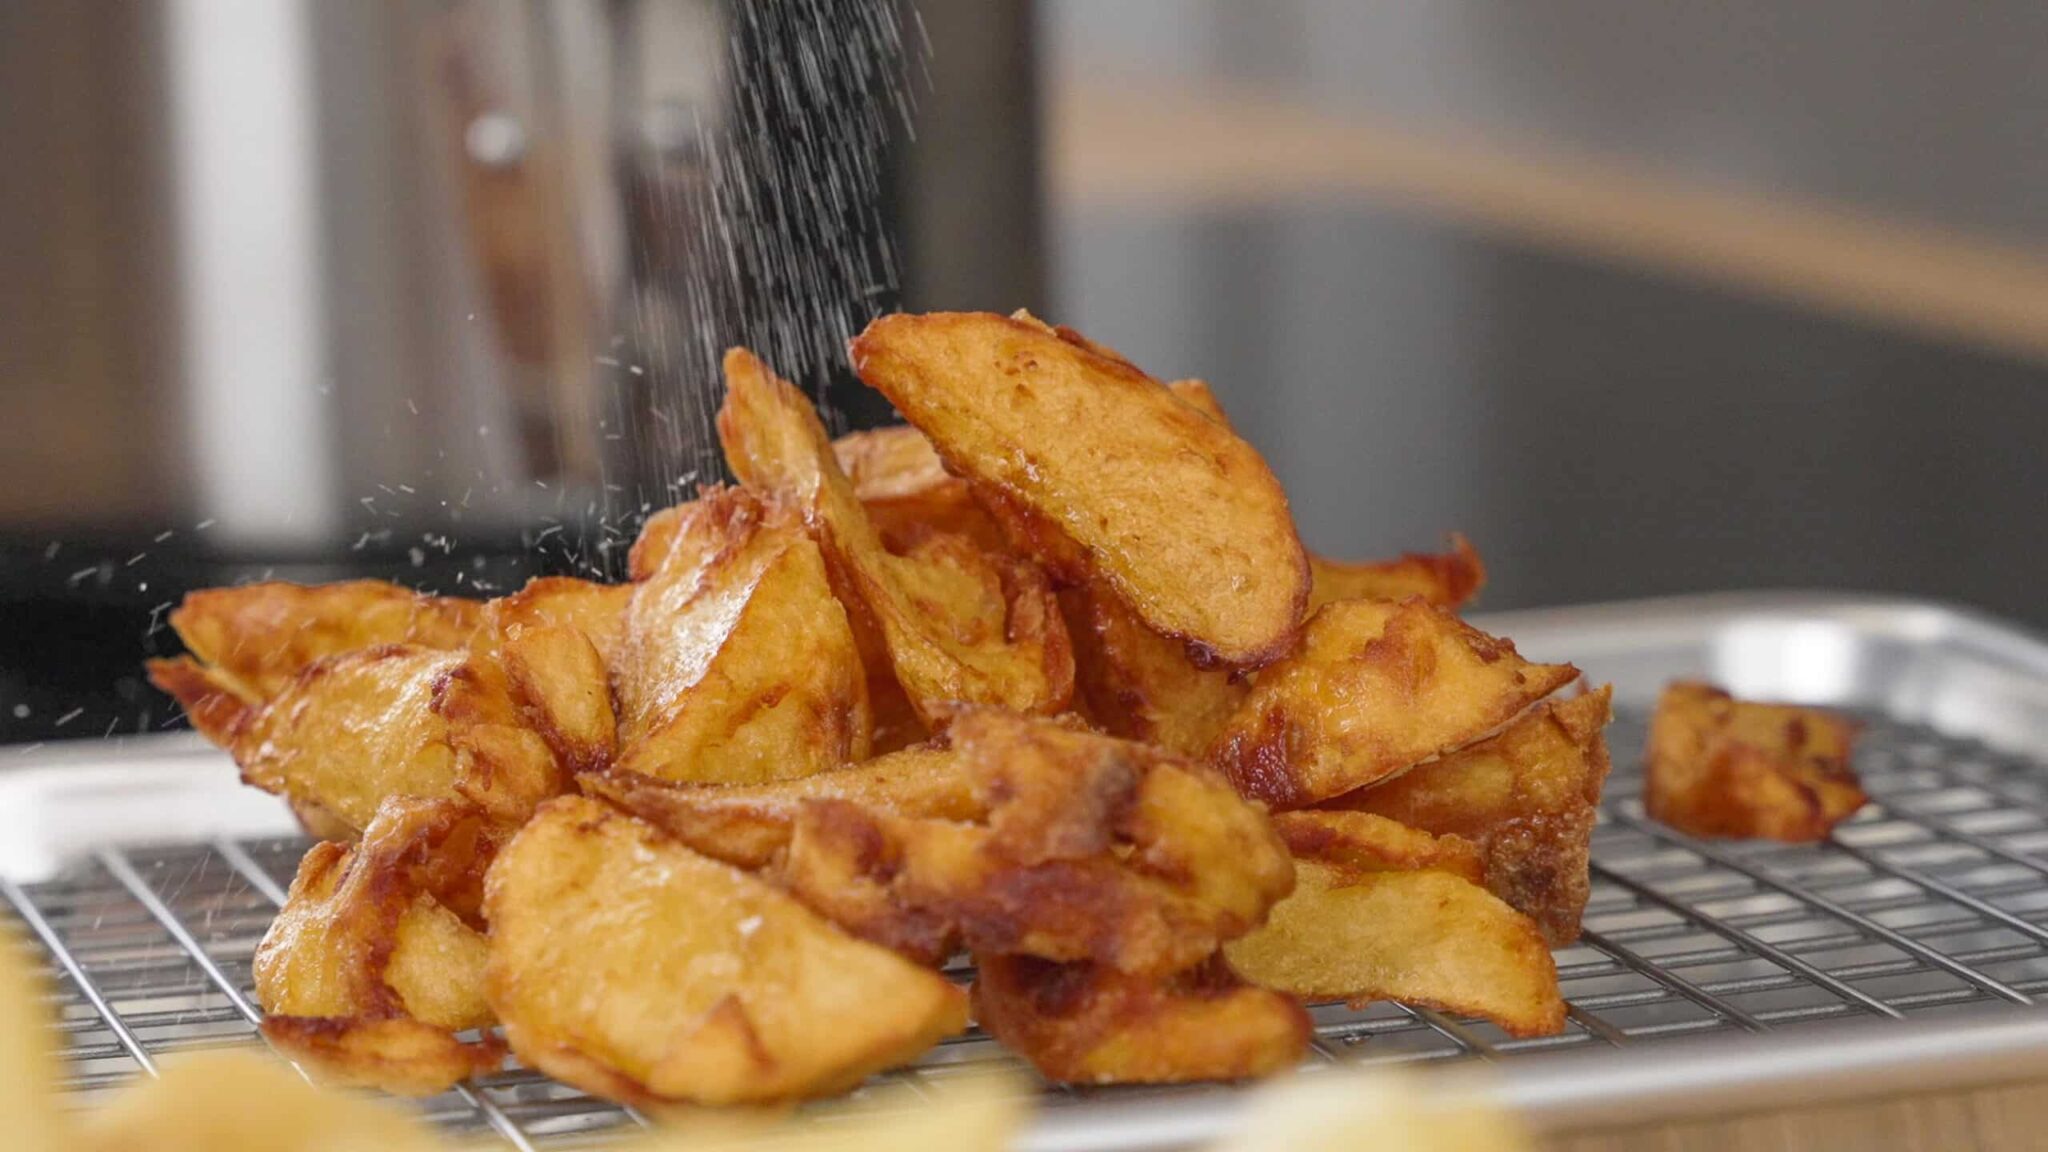 Crispy fries made from jacket potato